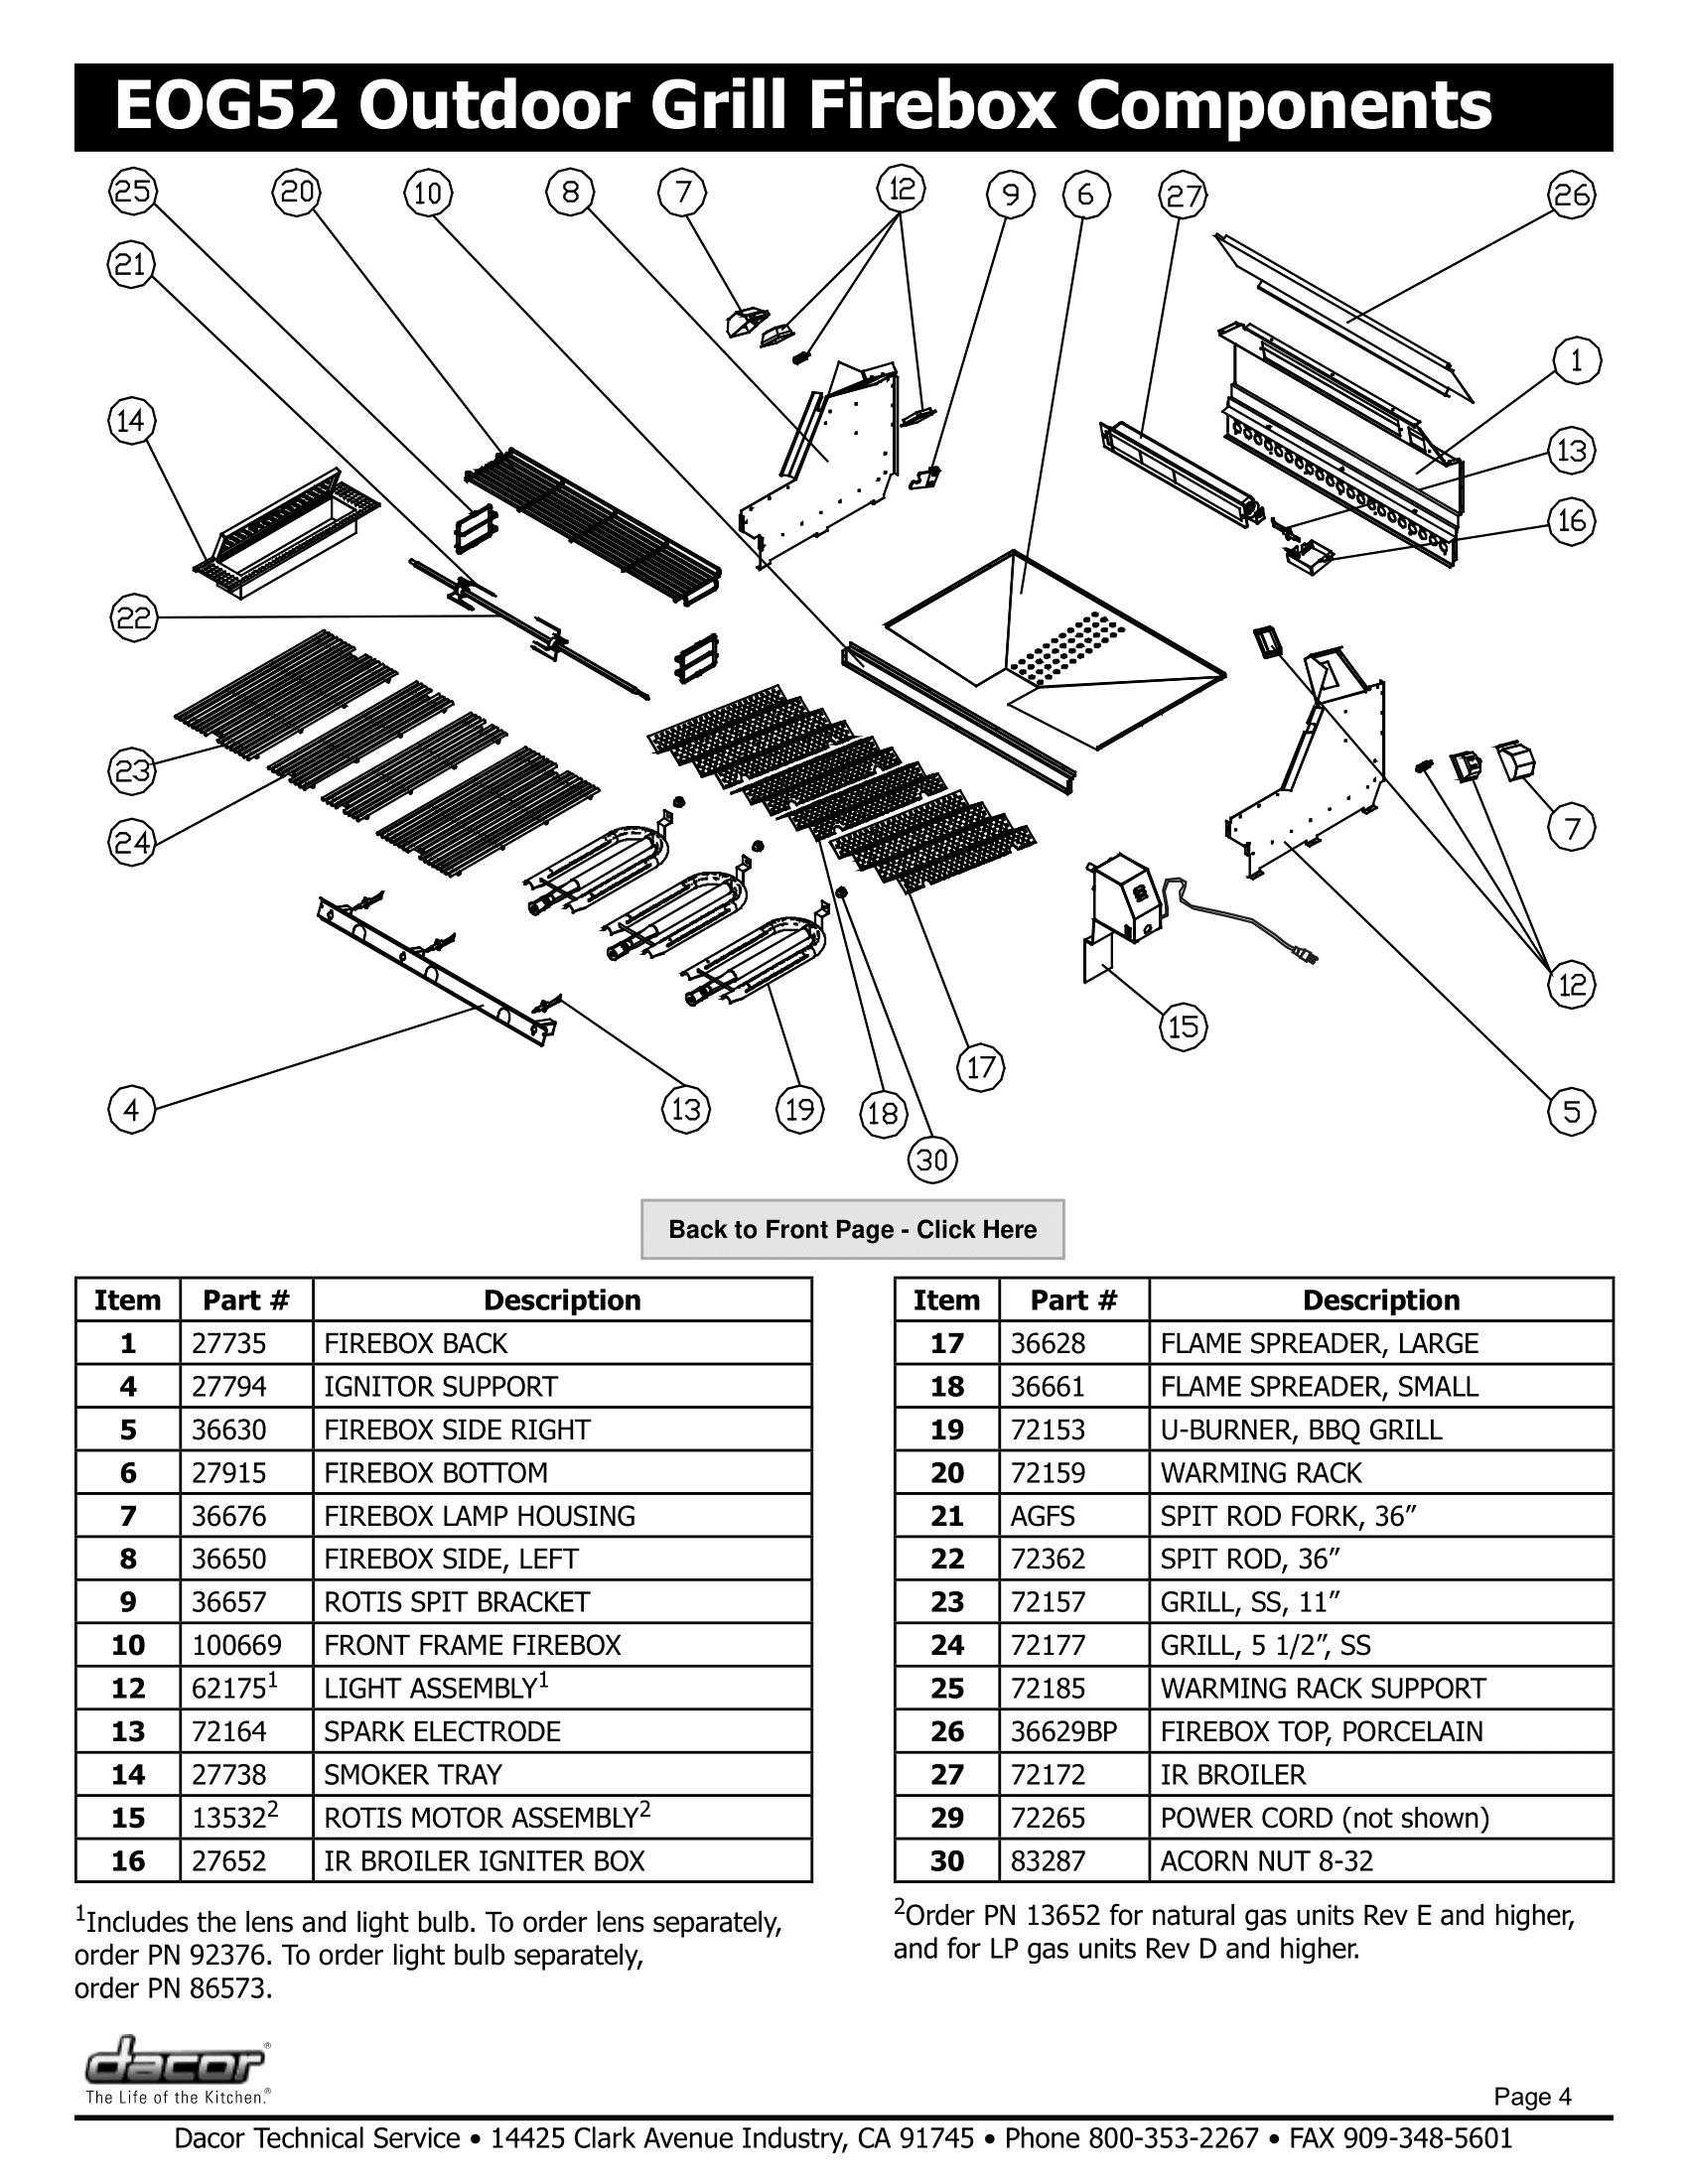 Dacor EOG52 Firebox Components Schematic